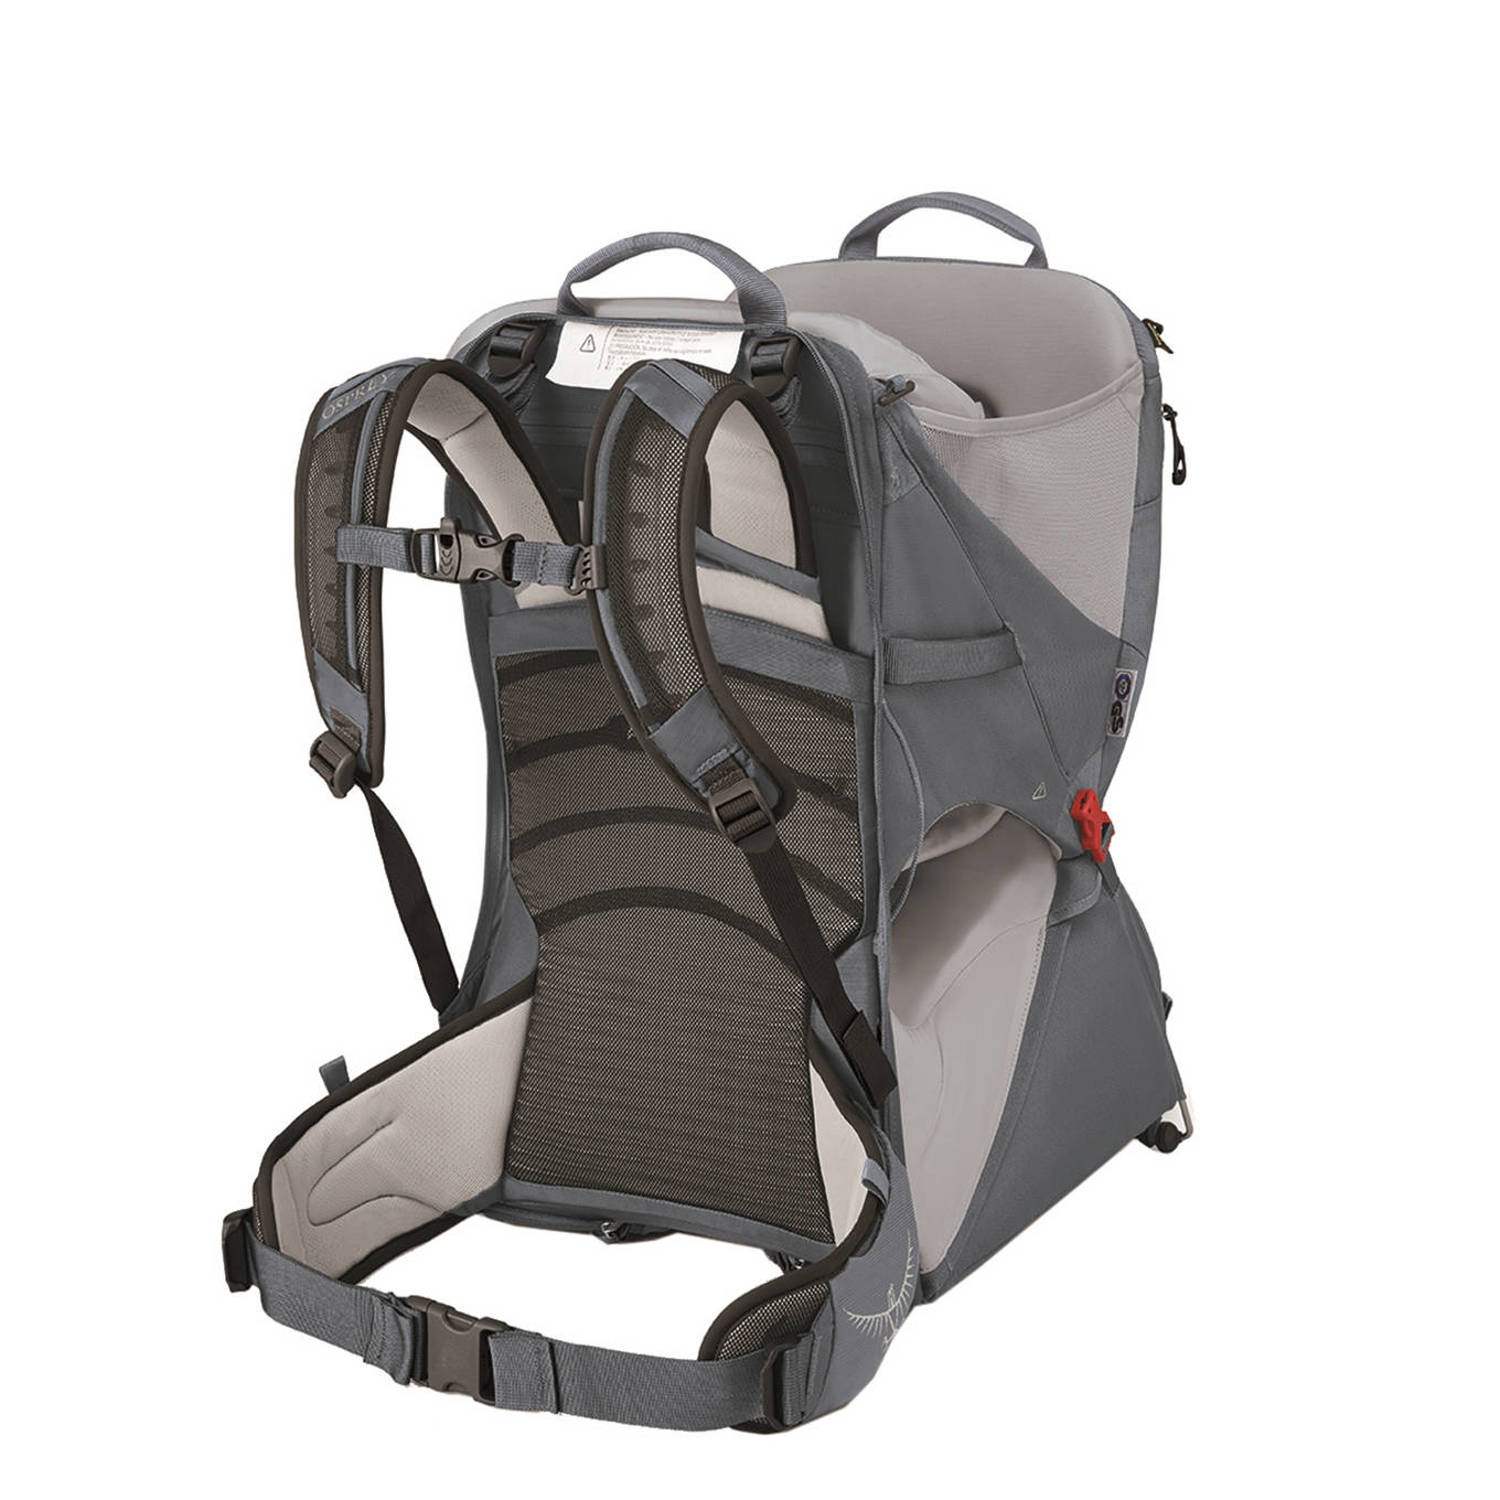 Osprey backpack draagzak Poco LT Child Carrier grijs